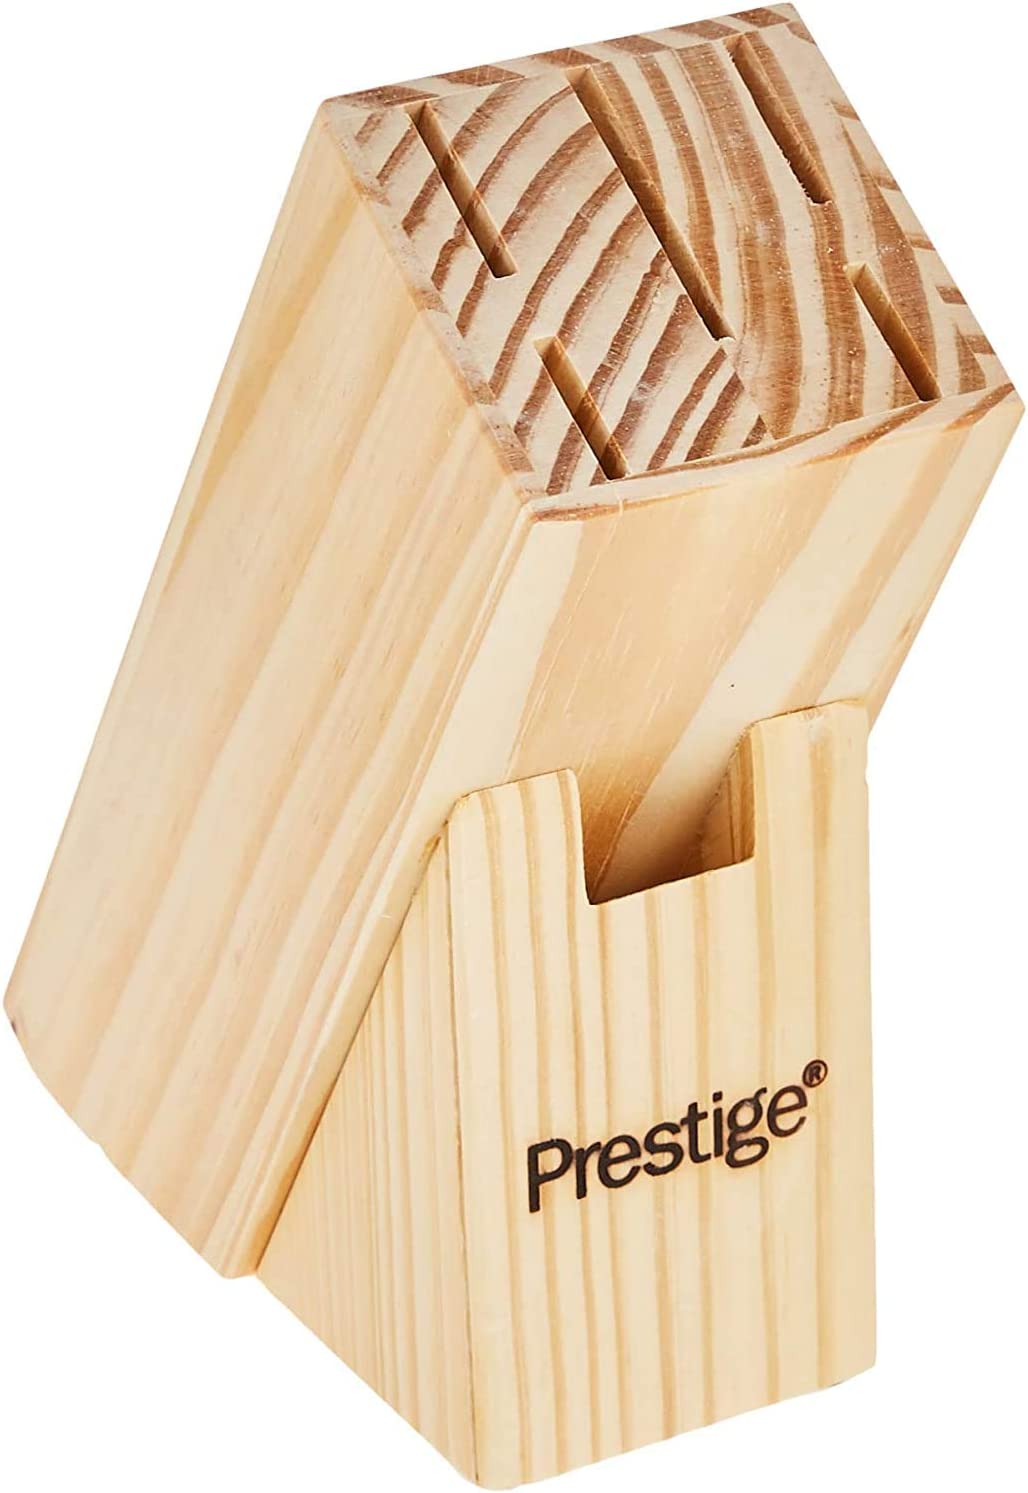 Prestige 7pcs Knife Block Set - 50919